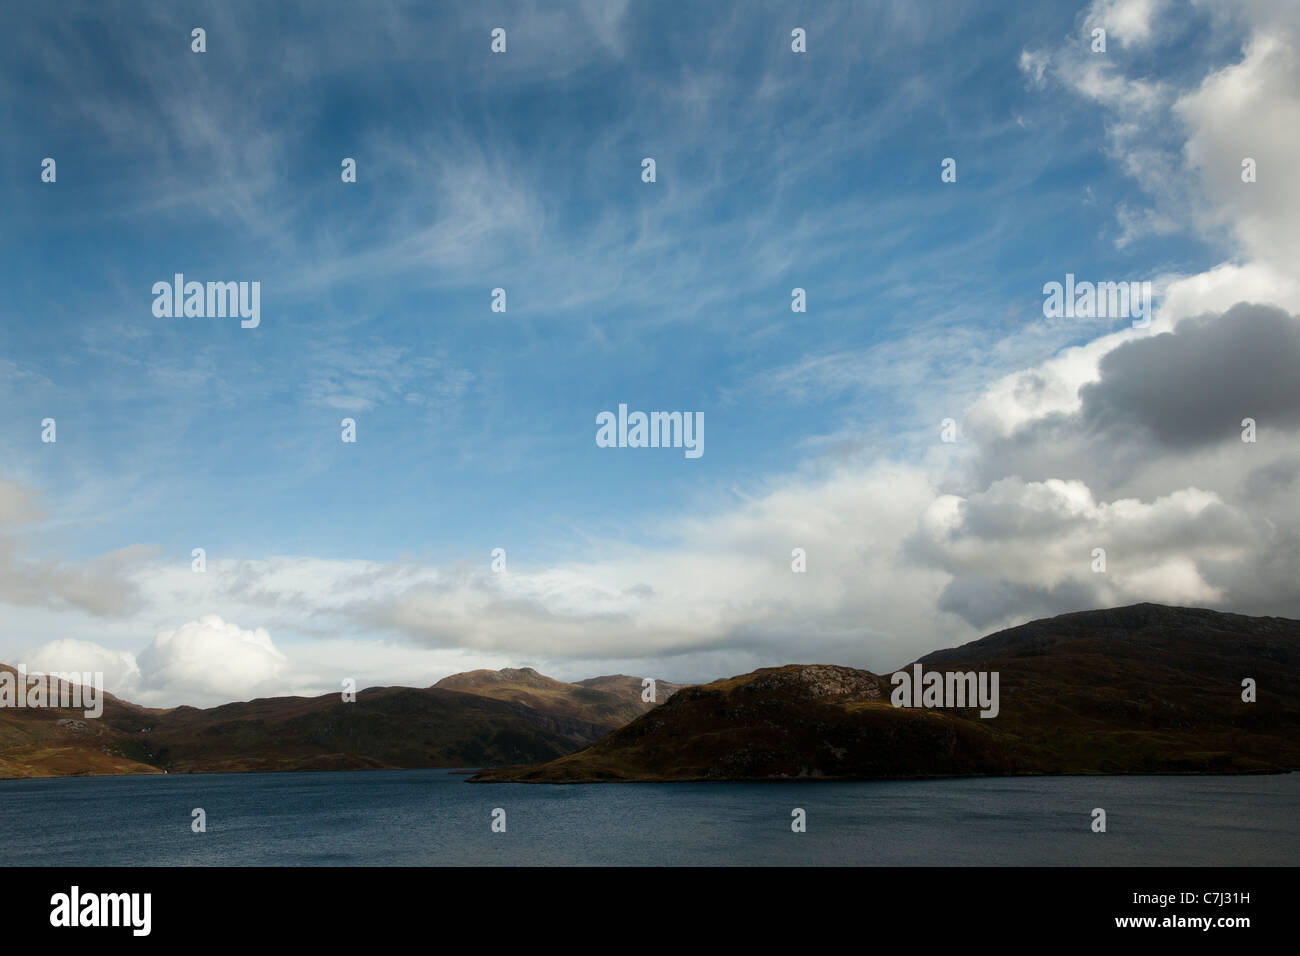 Beautiful landscape of the hills around Loch Gleann Dubh, Sutherland, Scotland, UK. Stock Photo